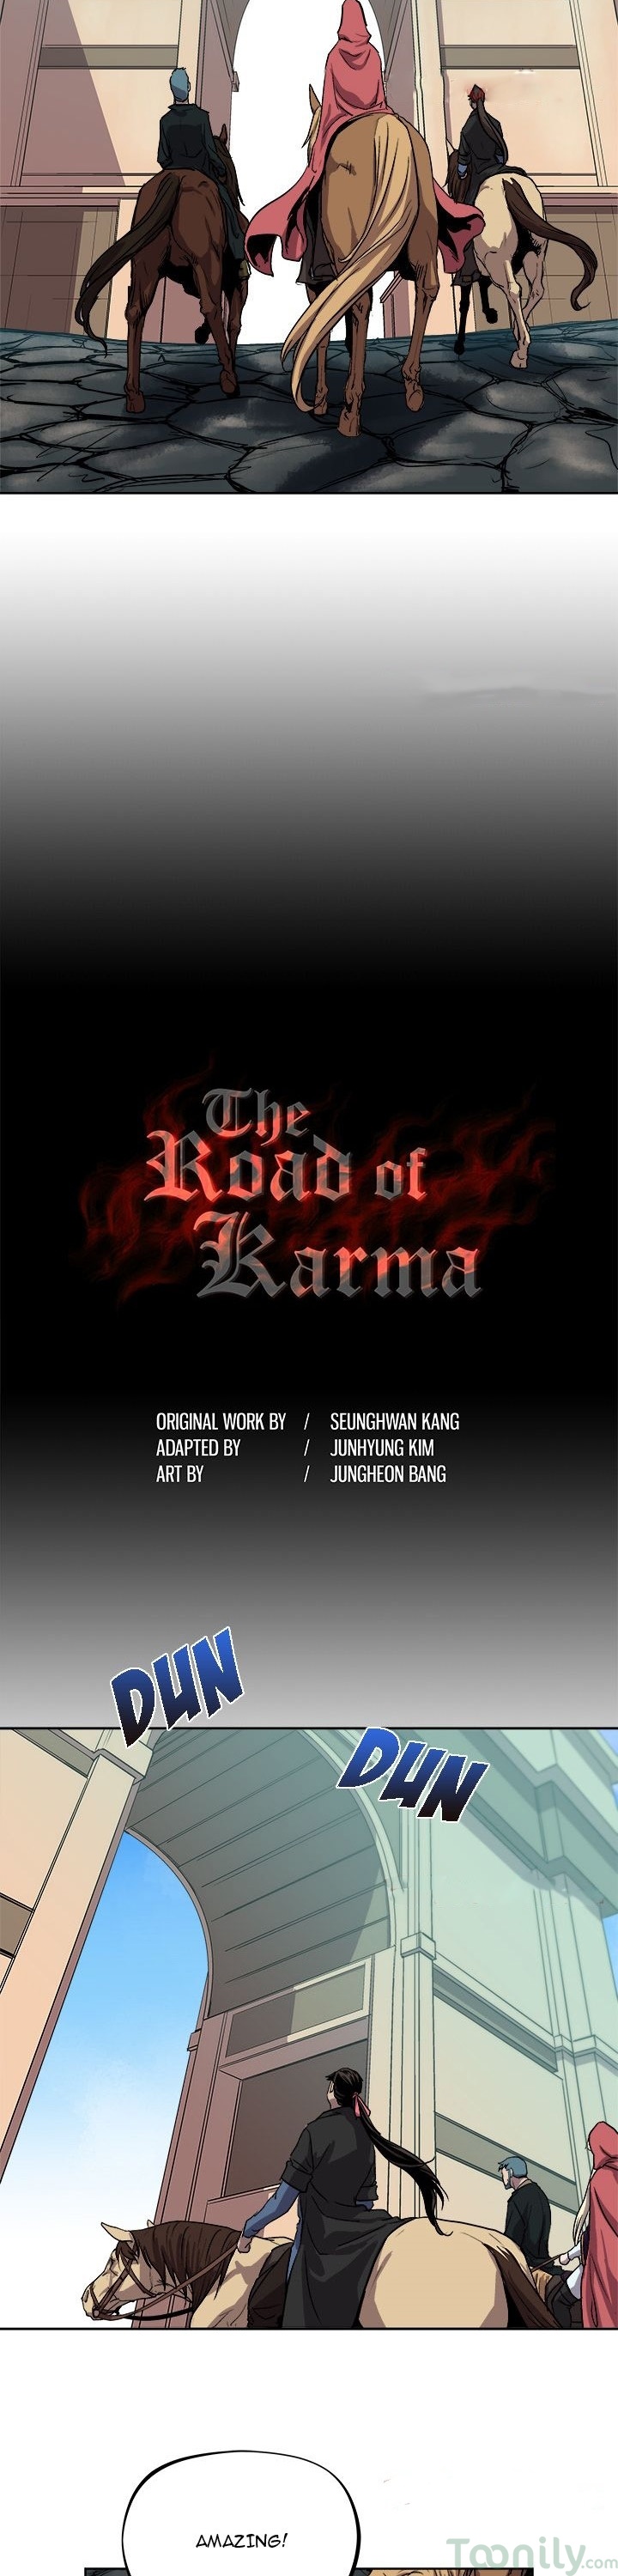 The Road of Karma image